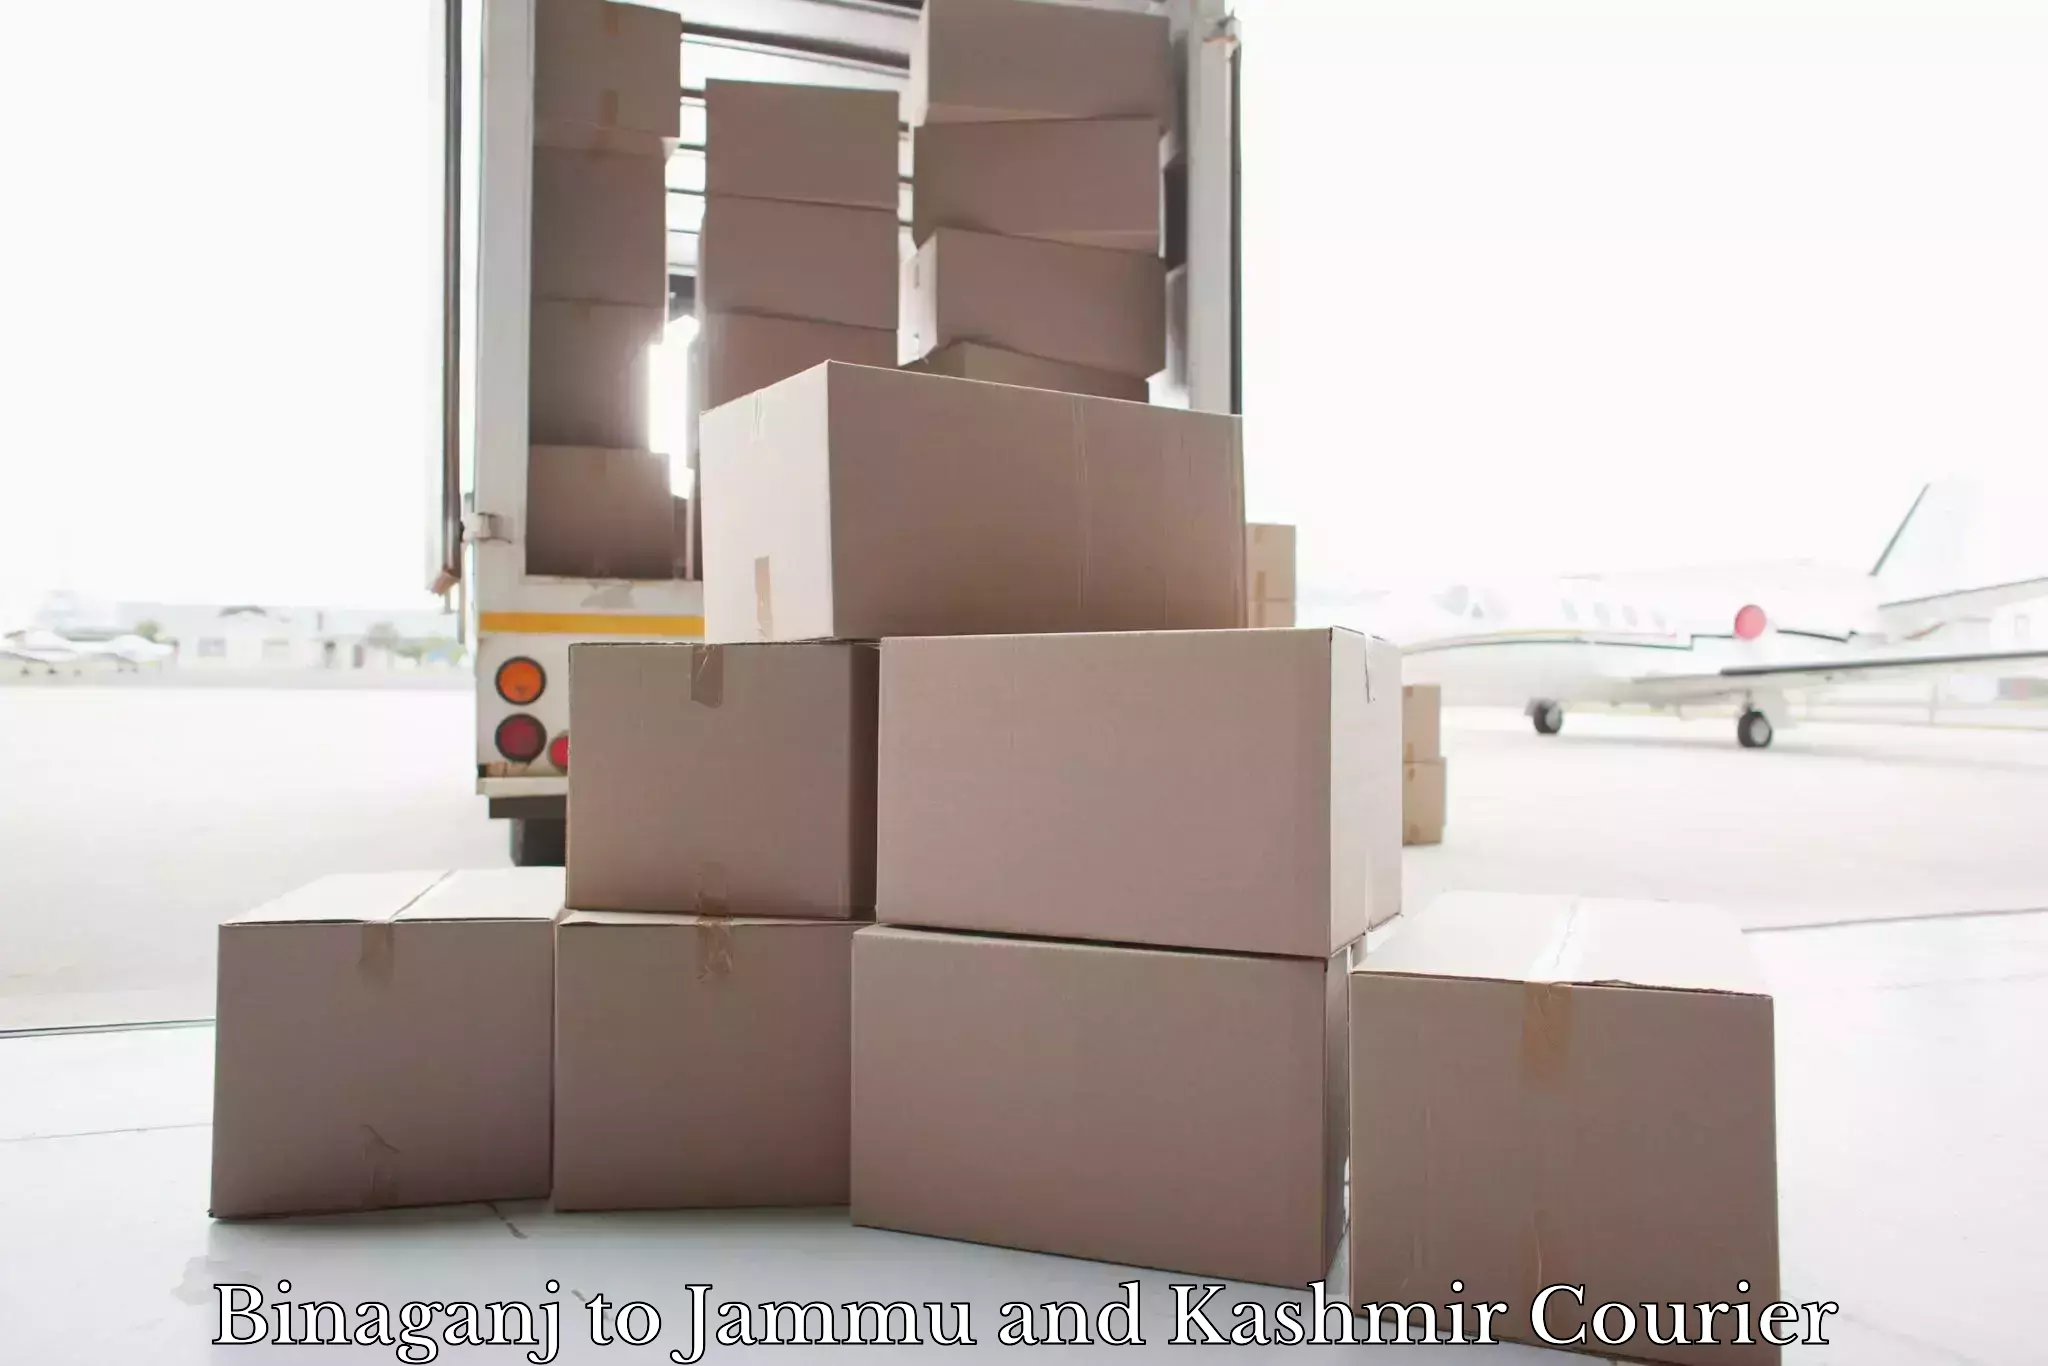 Luggage shipment tracking Binaganj to Nagrota